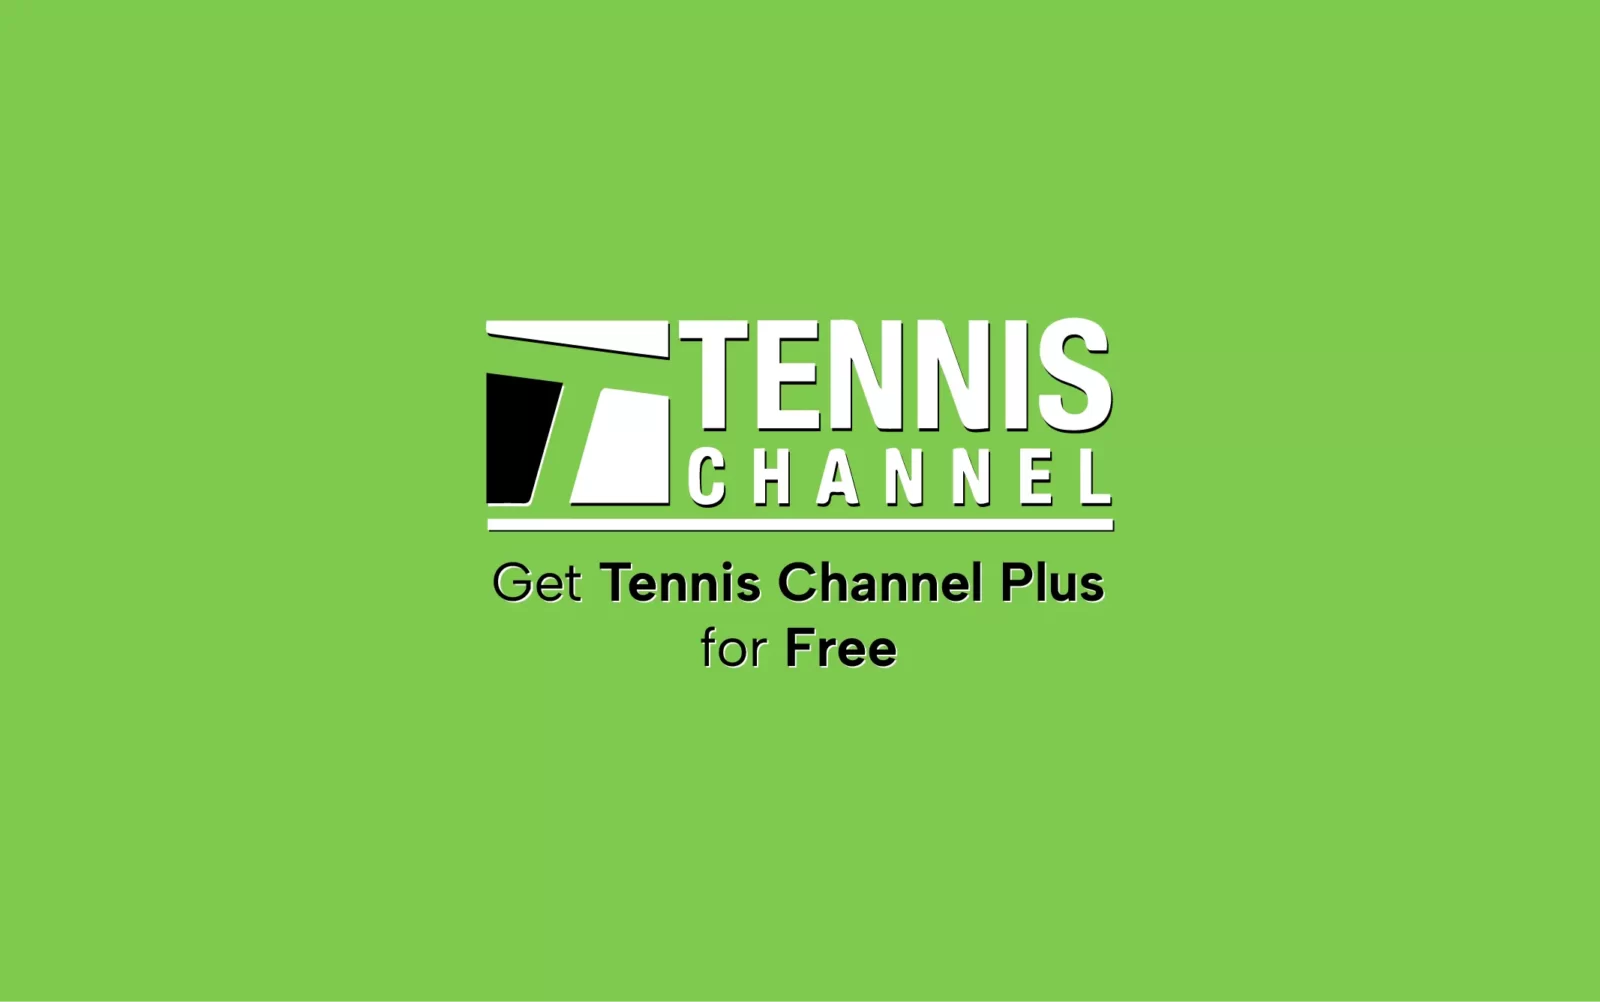 tennis channel plus discount code 2022